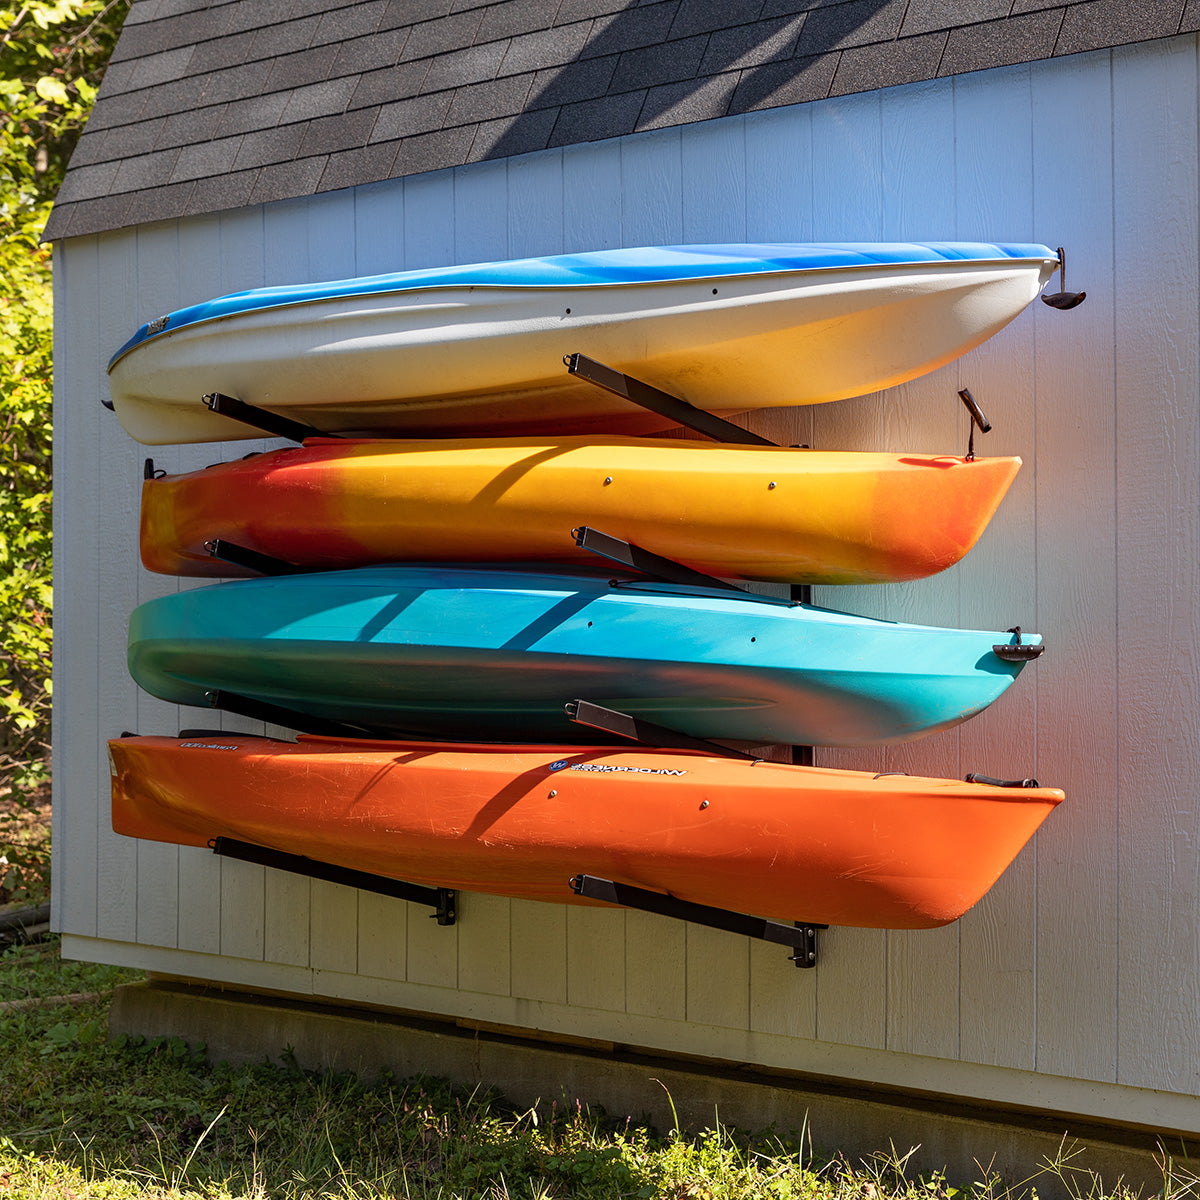 Outdoor Kayak Storage Rack, Wall Mount, Holds up to 4 Kayaks